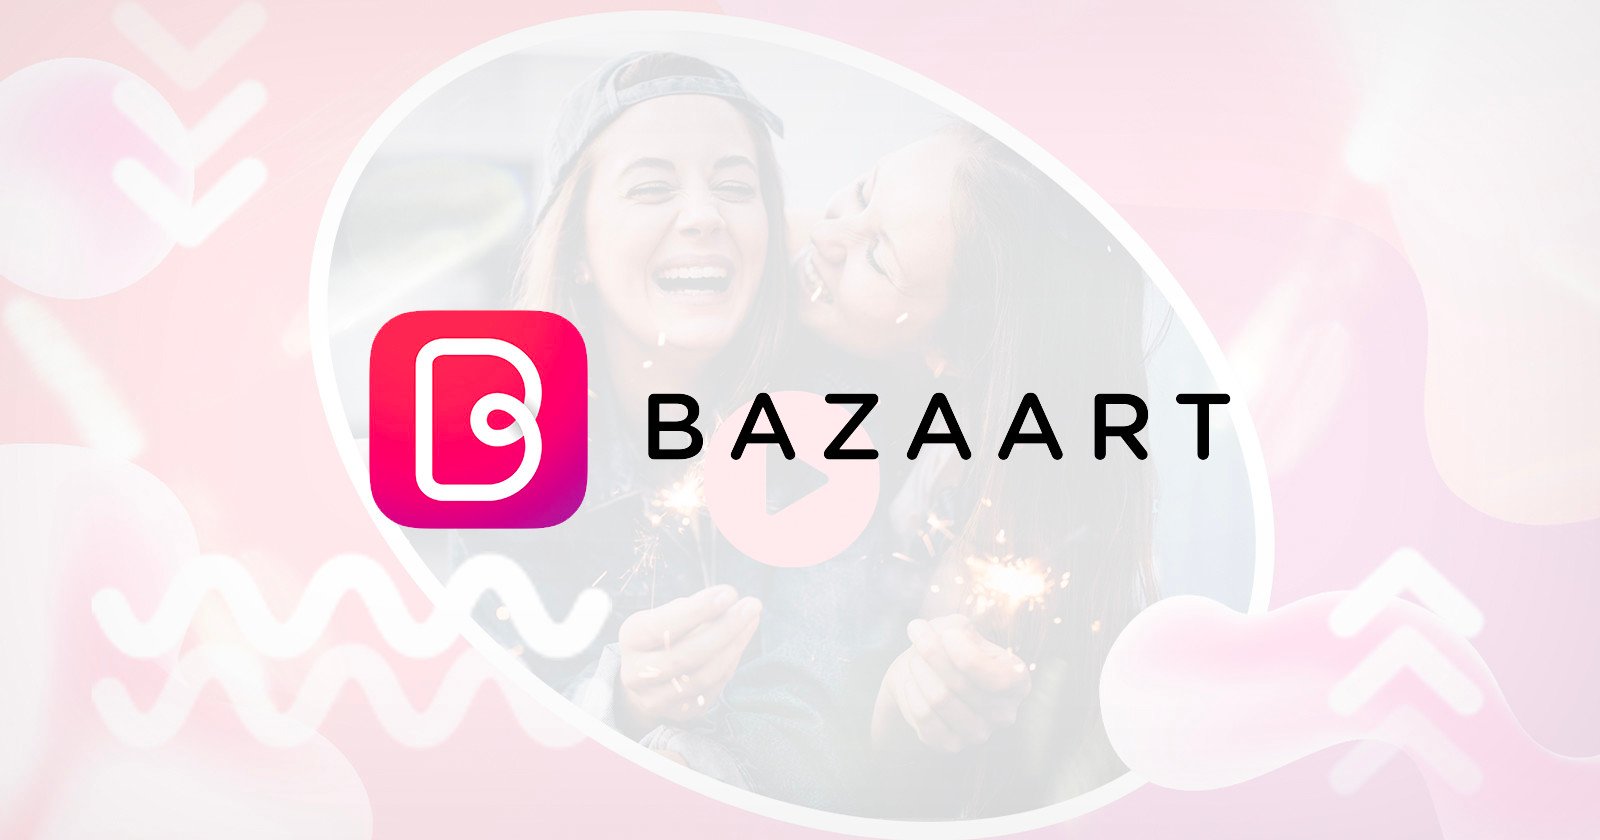  photo editing app bazaart adds video keep 